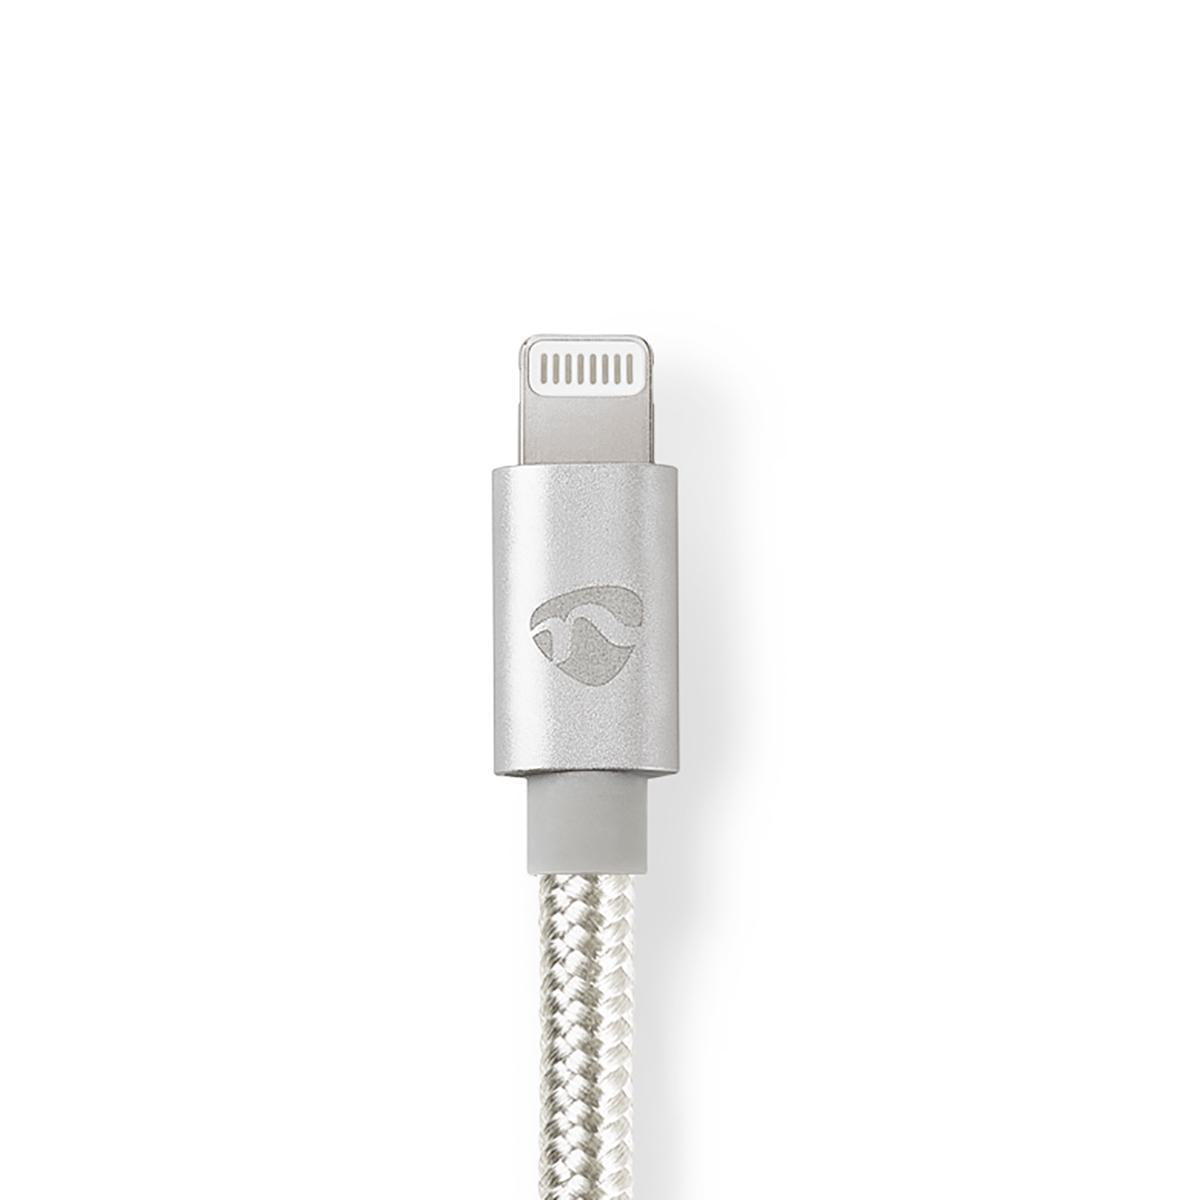 Lightning Kabel | USB 2.0 | Apple Lightning 8-Pin | USB-C™ Stecker | 480 Mbps | Vergoldet | 1.00 m | Rund | Geflochten / Nylon | Aluminium / Silber | Verpackung mit Sichtfenster